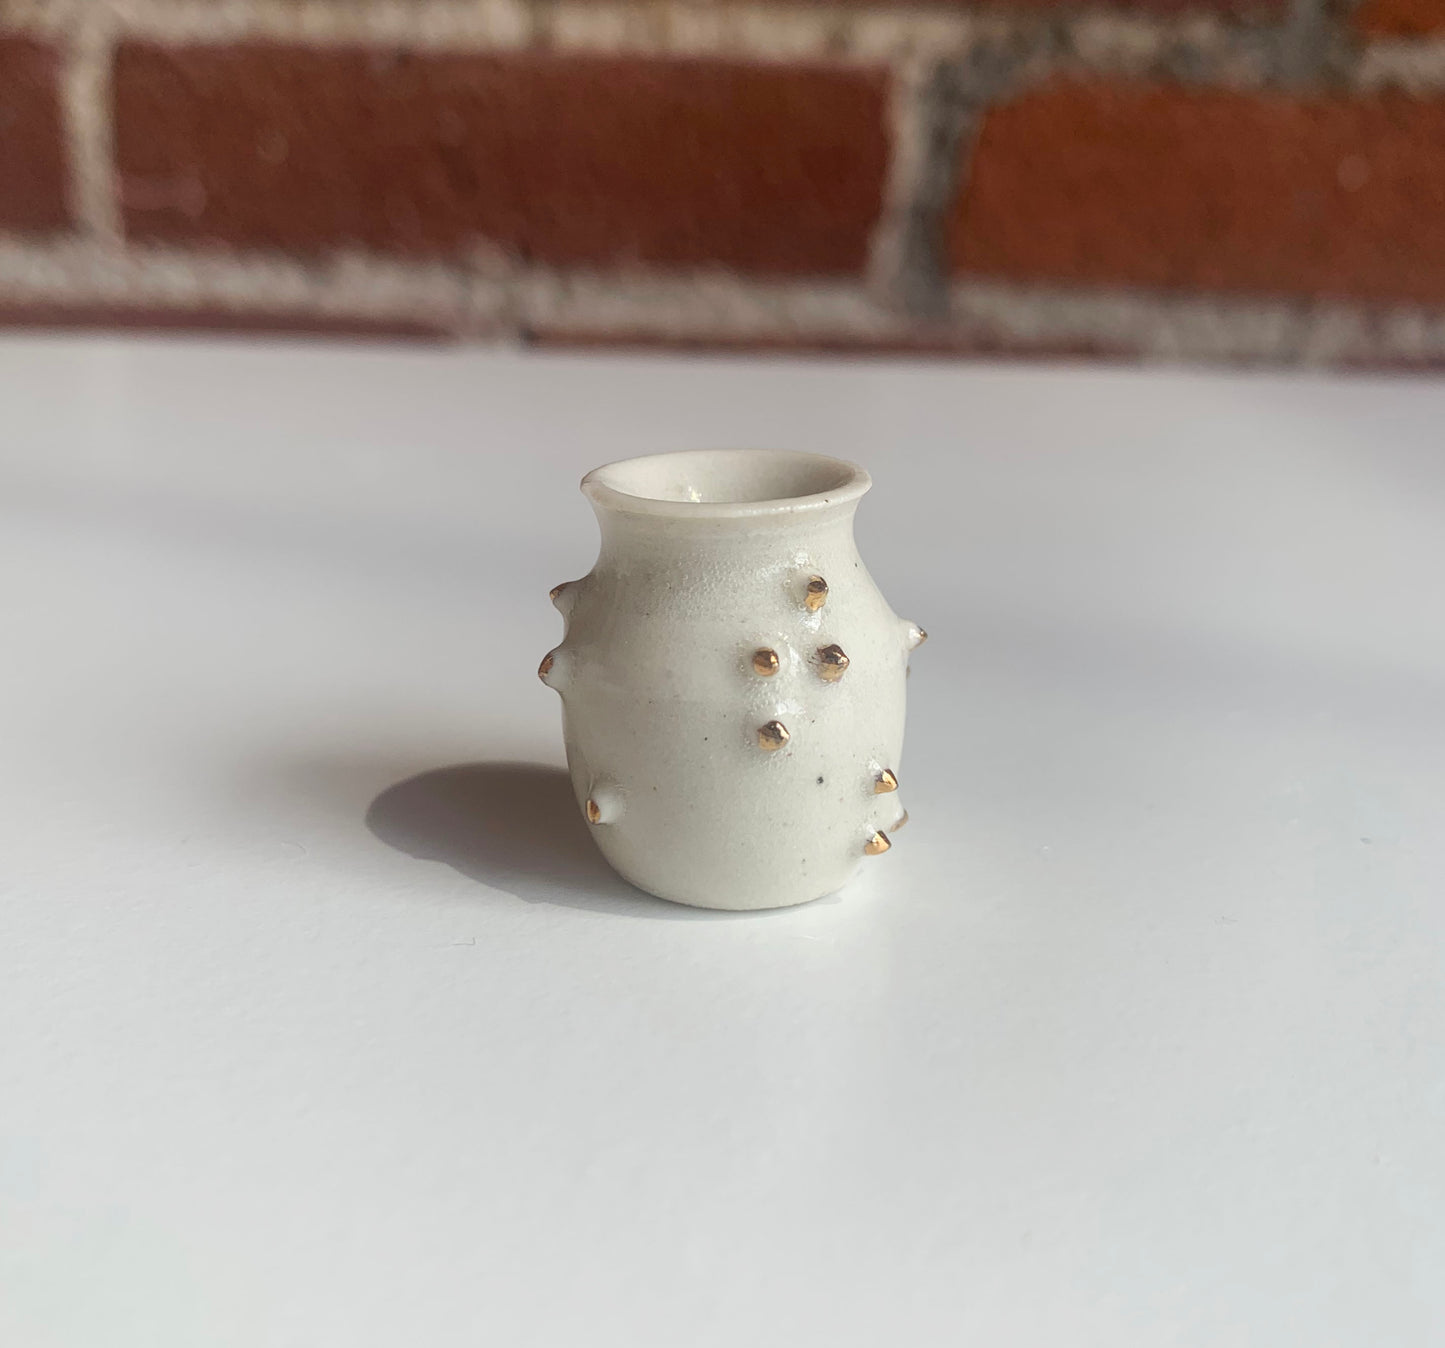 Miniature Meditation Vase "Breathe" | Amy Sanders de Melo